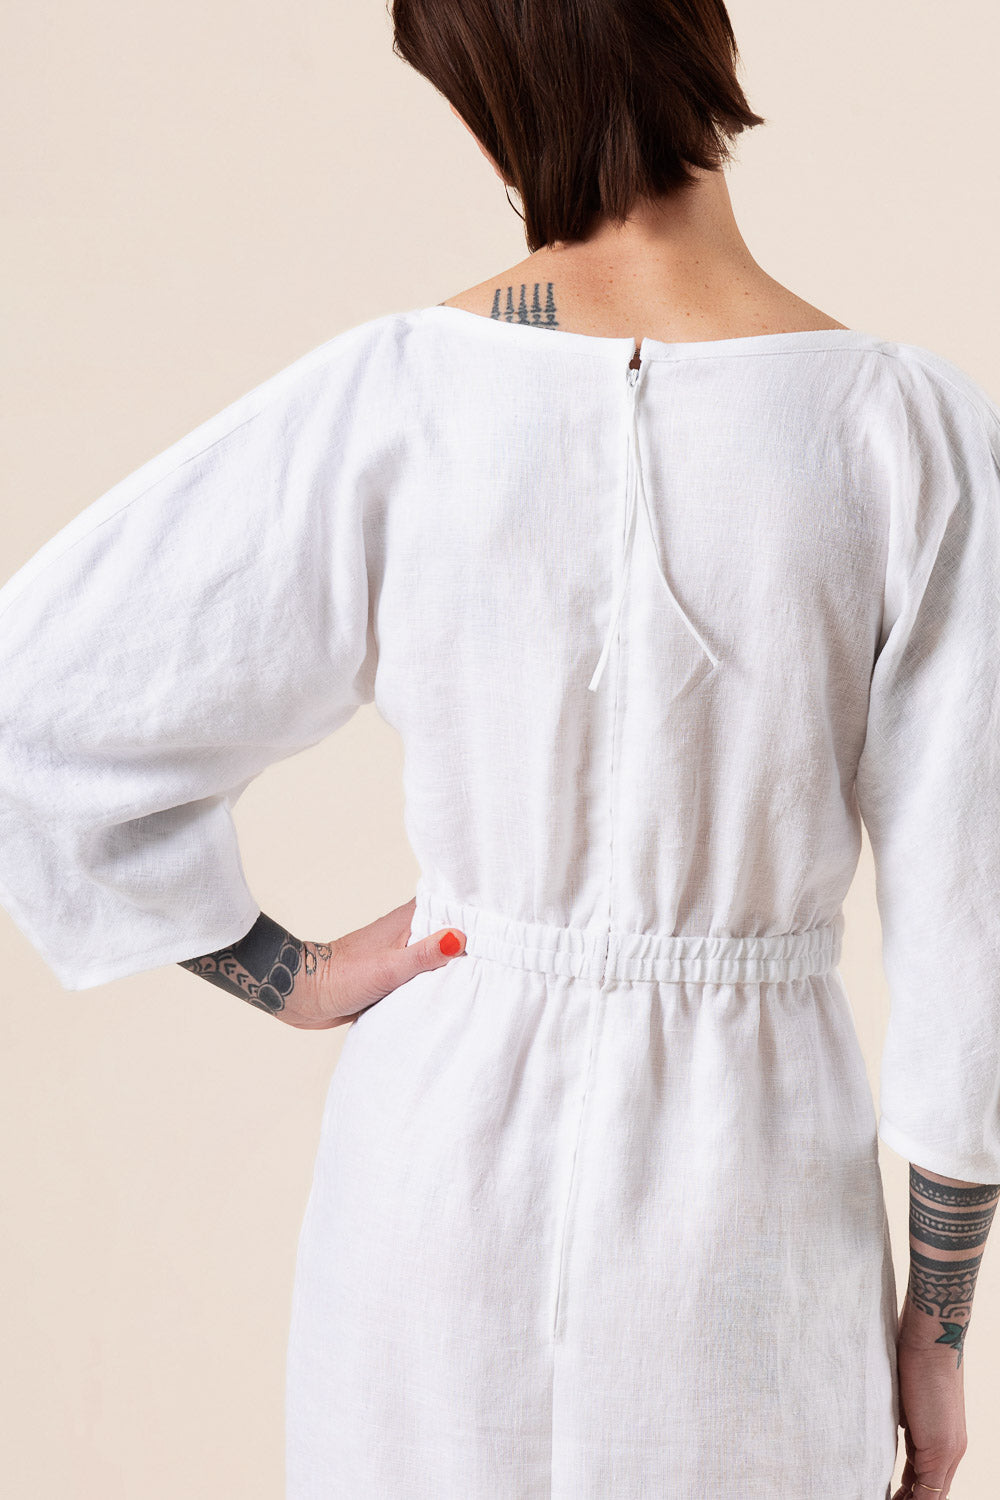 Closet Core Patterns | Jo Dress and Jumpsuit